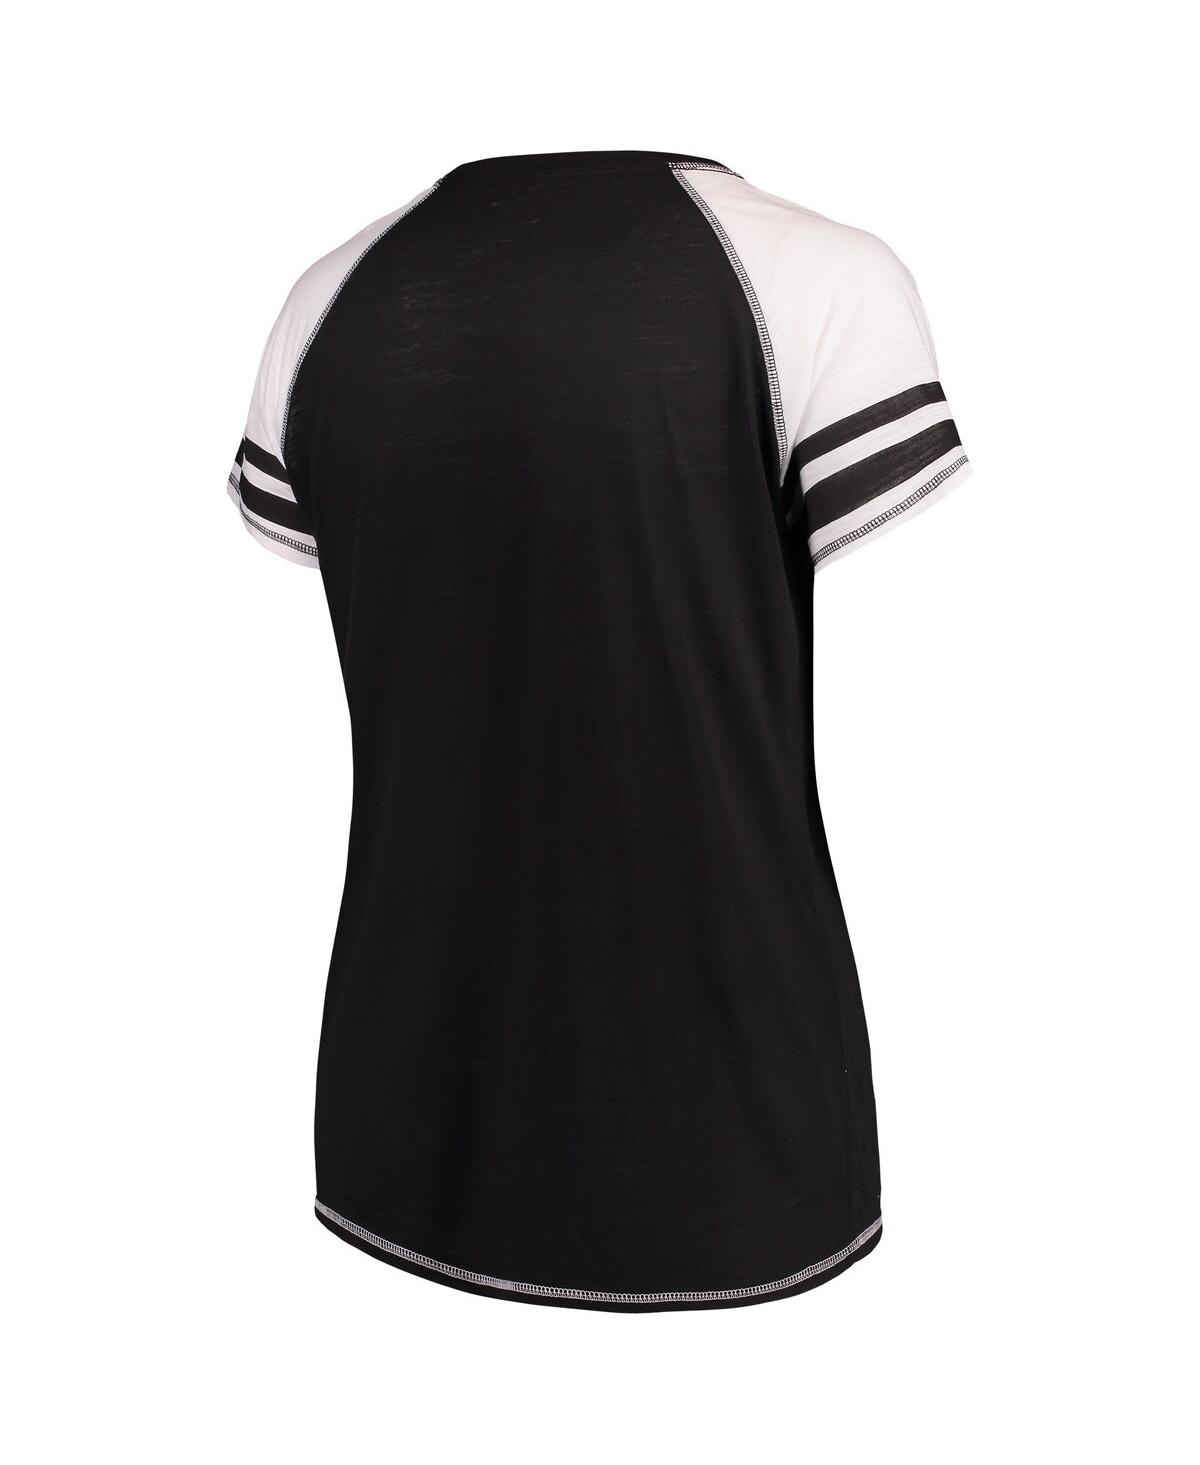 Soft As A Grape Women's Gray Chicago White Sox Plus V-Neck Jersey T-shirt